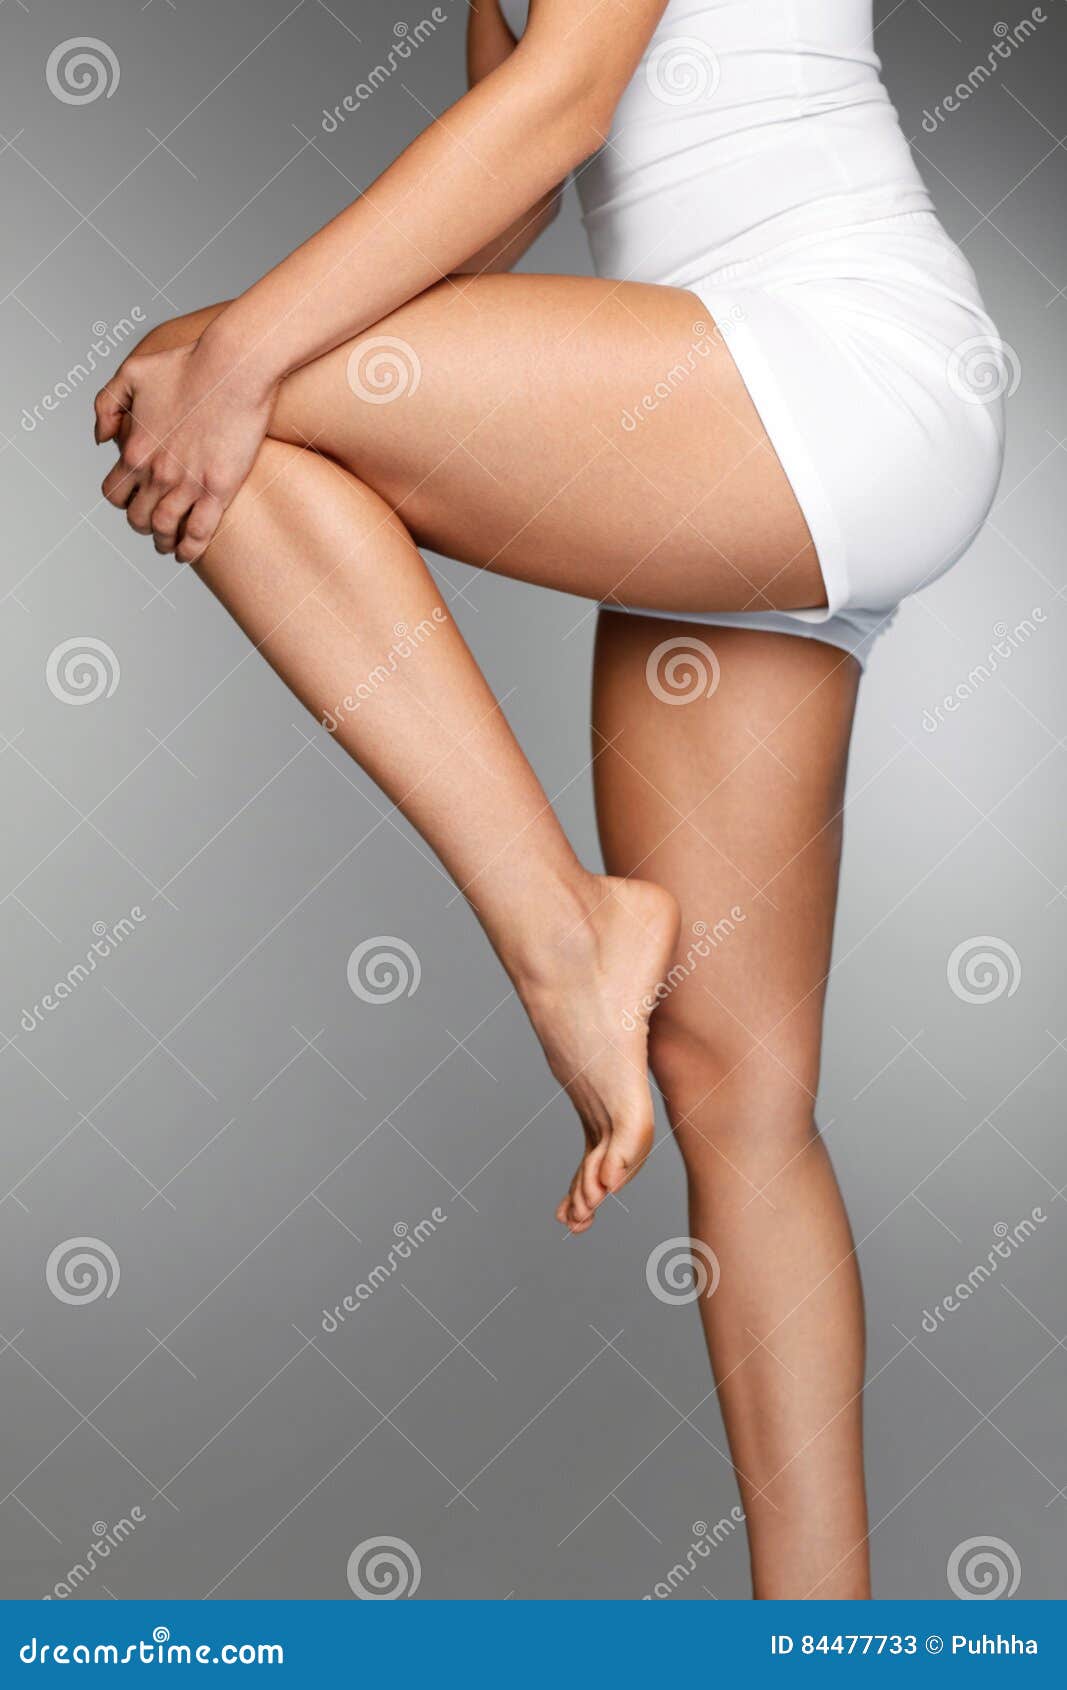 До белого коленя. Красивые колени. Женские колени. Красивые женские колени. Красивые колени девушек.